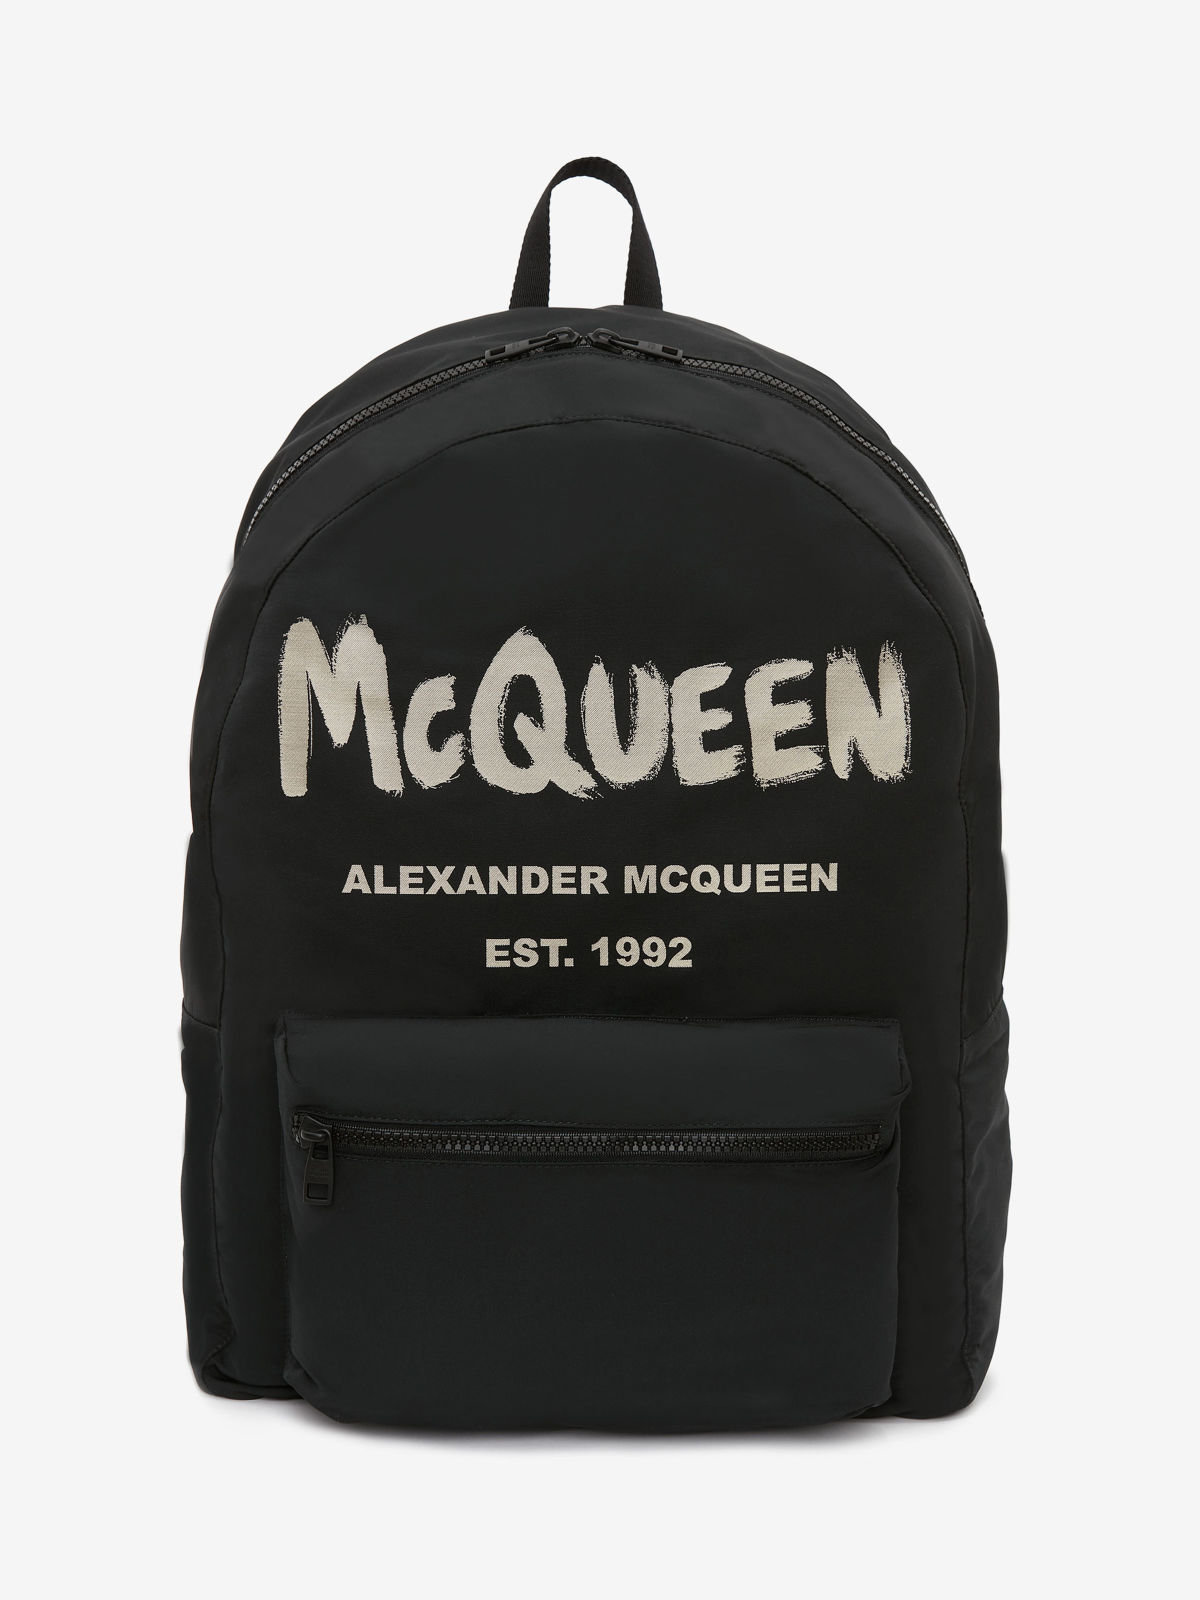 Alexander McQueen: Men’s Christmas Gift Guide 2021